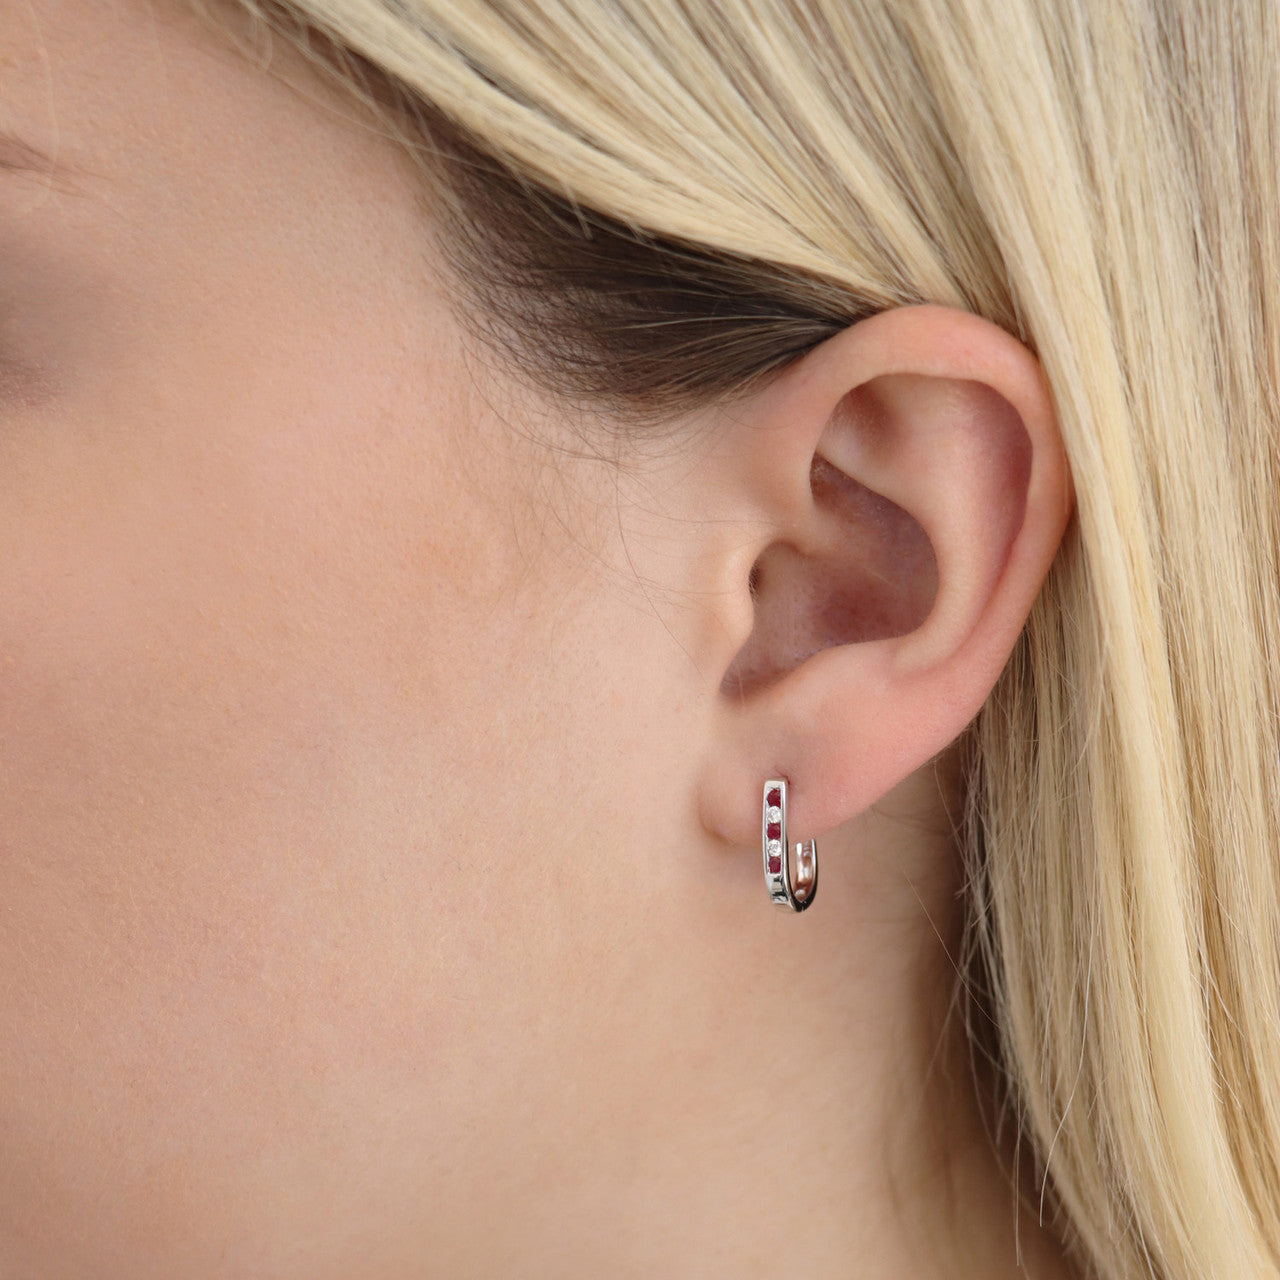 Ice Jewellery Ruby Diamond Huggie Earrings with 0.15ct Diamonds in 9K White Gold - 9WHUG15GHR | Ice Jewellery Australia